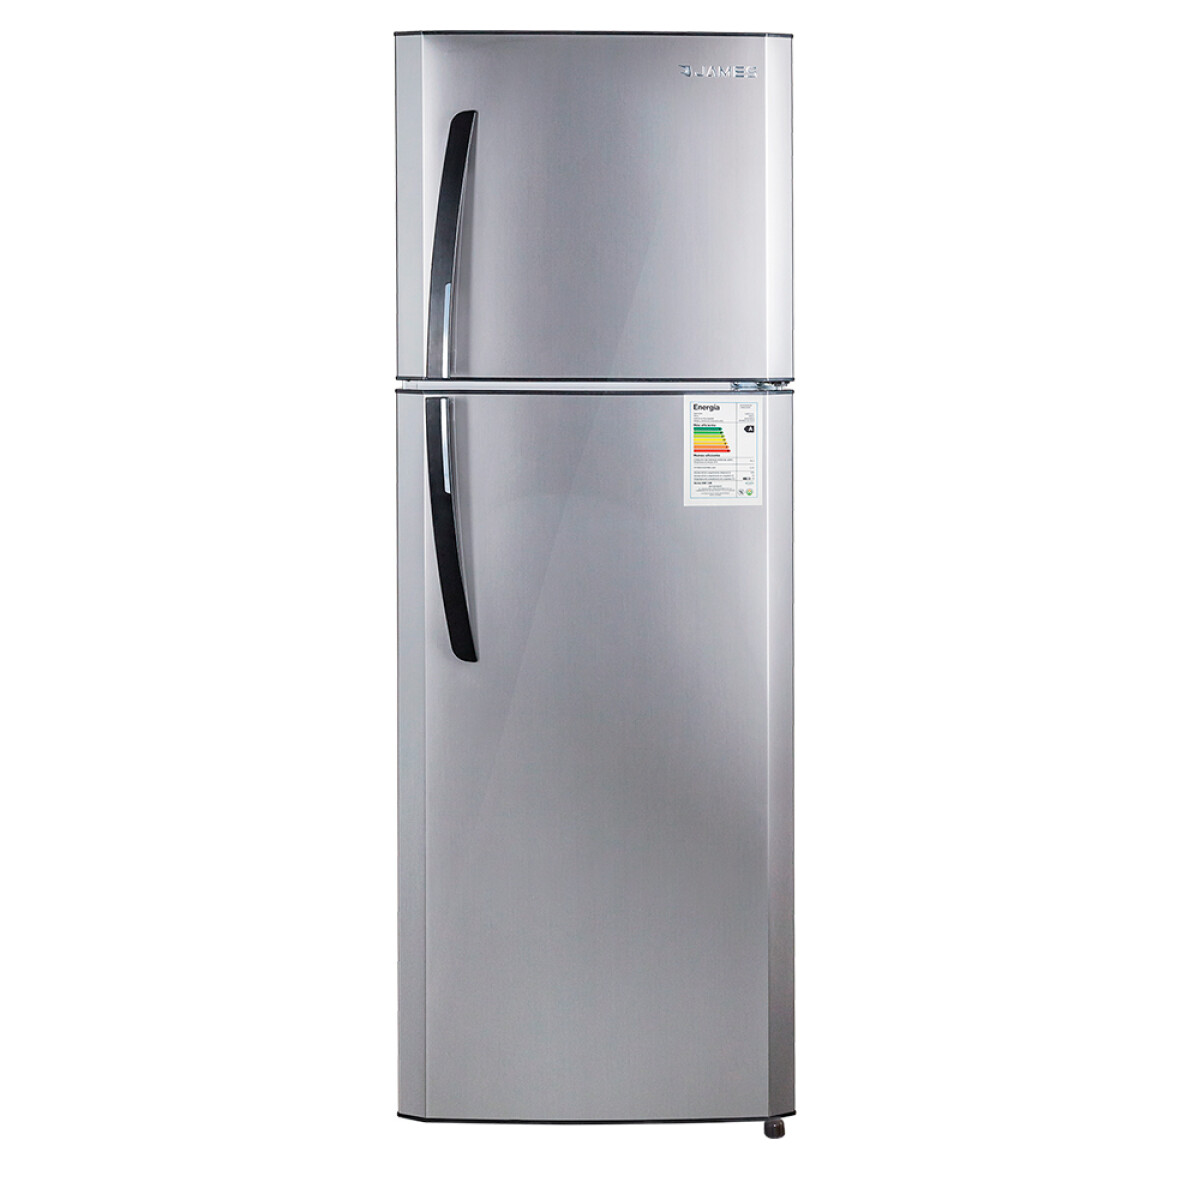 Refrigerador James JM350 INOX 